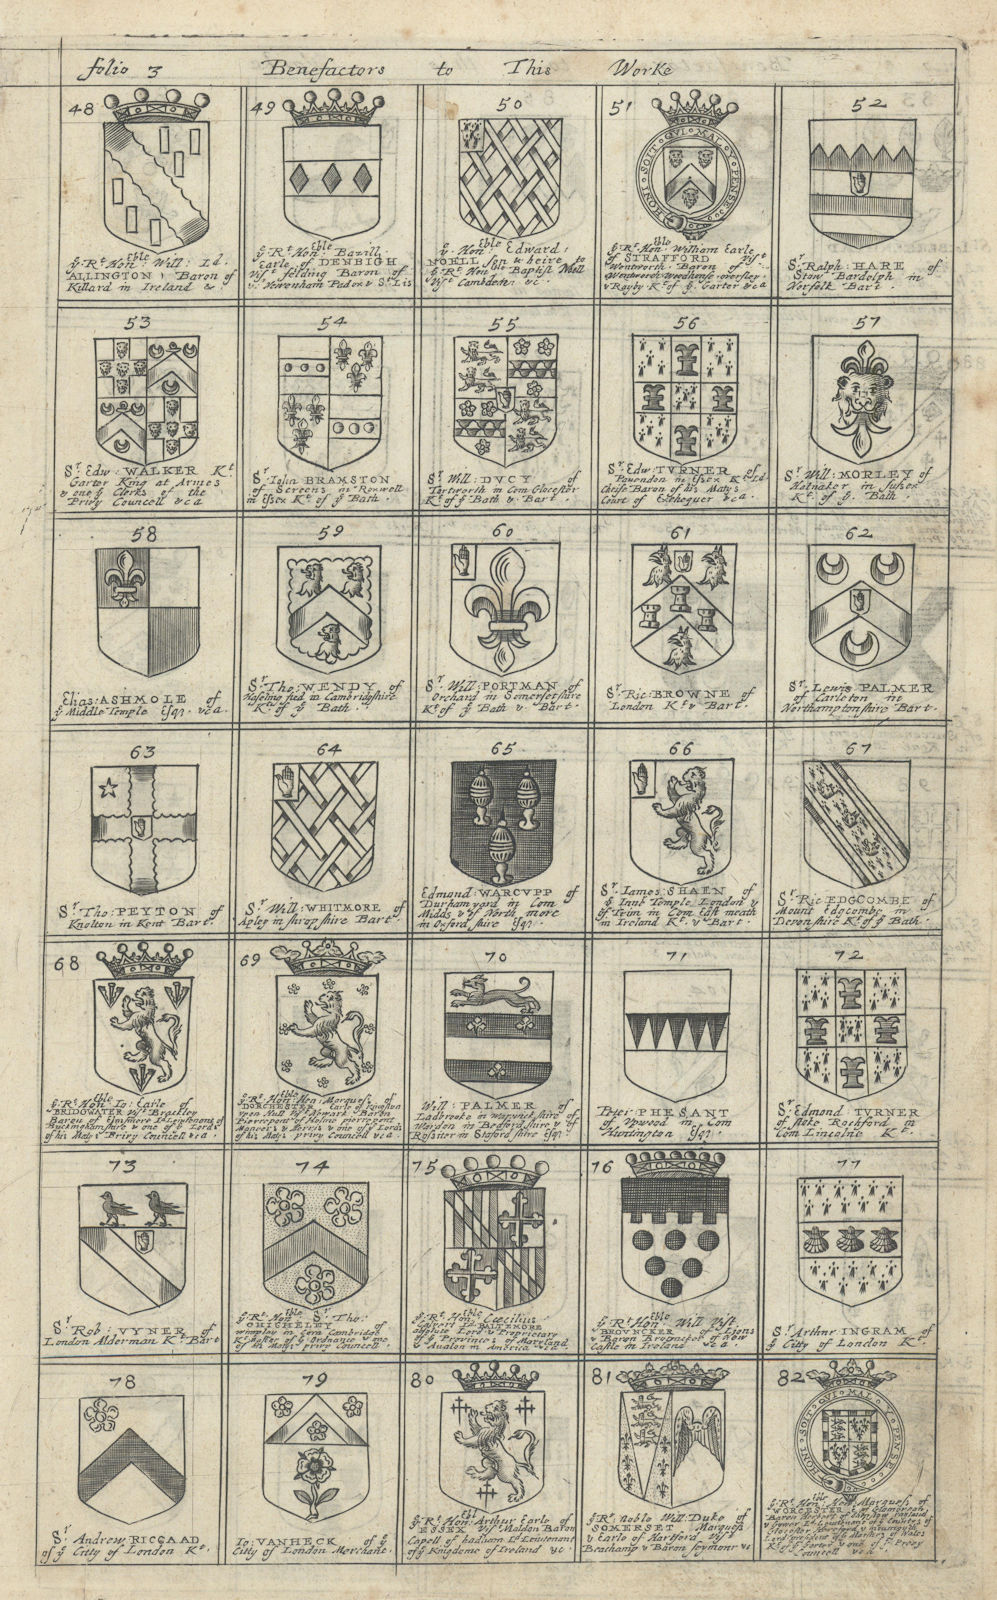 Family coats of arms of benefactors to Blome's Britannia. Folio 3 #48-82 1673